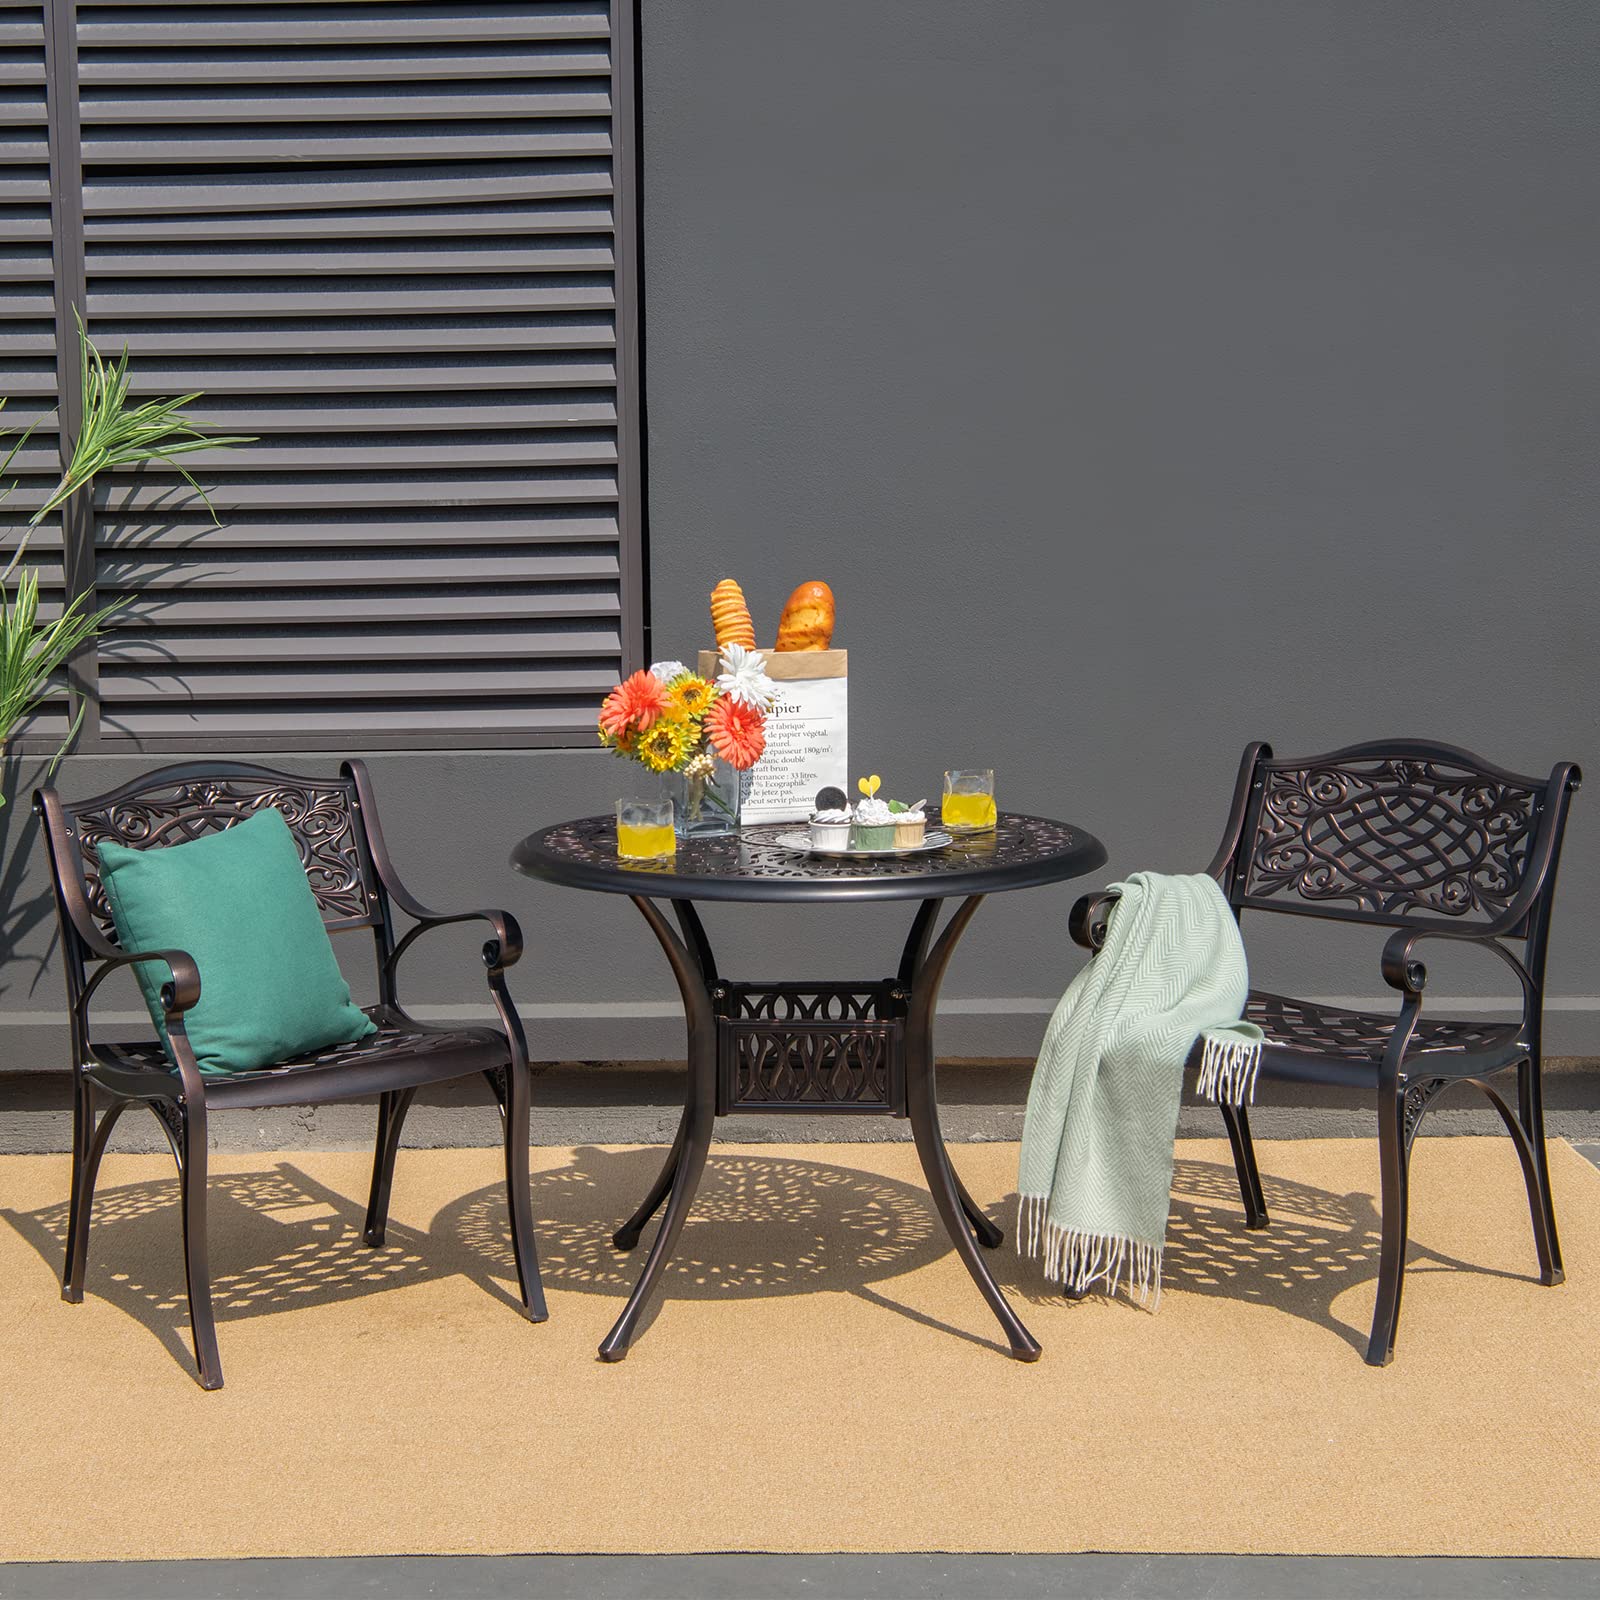 Giantex Patio Chairs, Outdoor Armchairs for Garden Deck Backyard Poolside